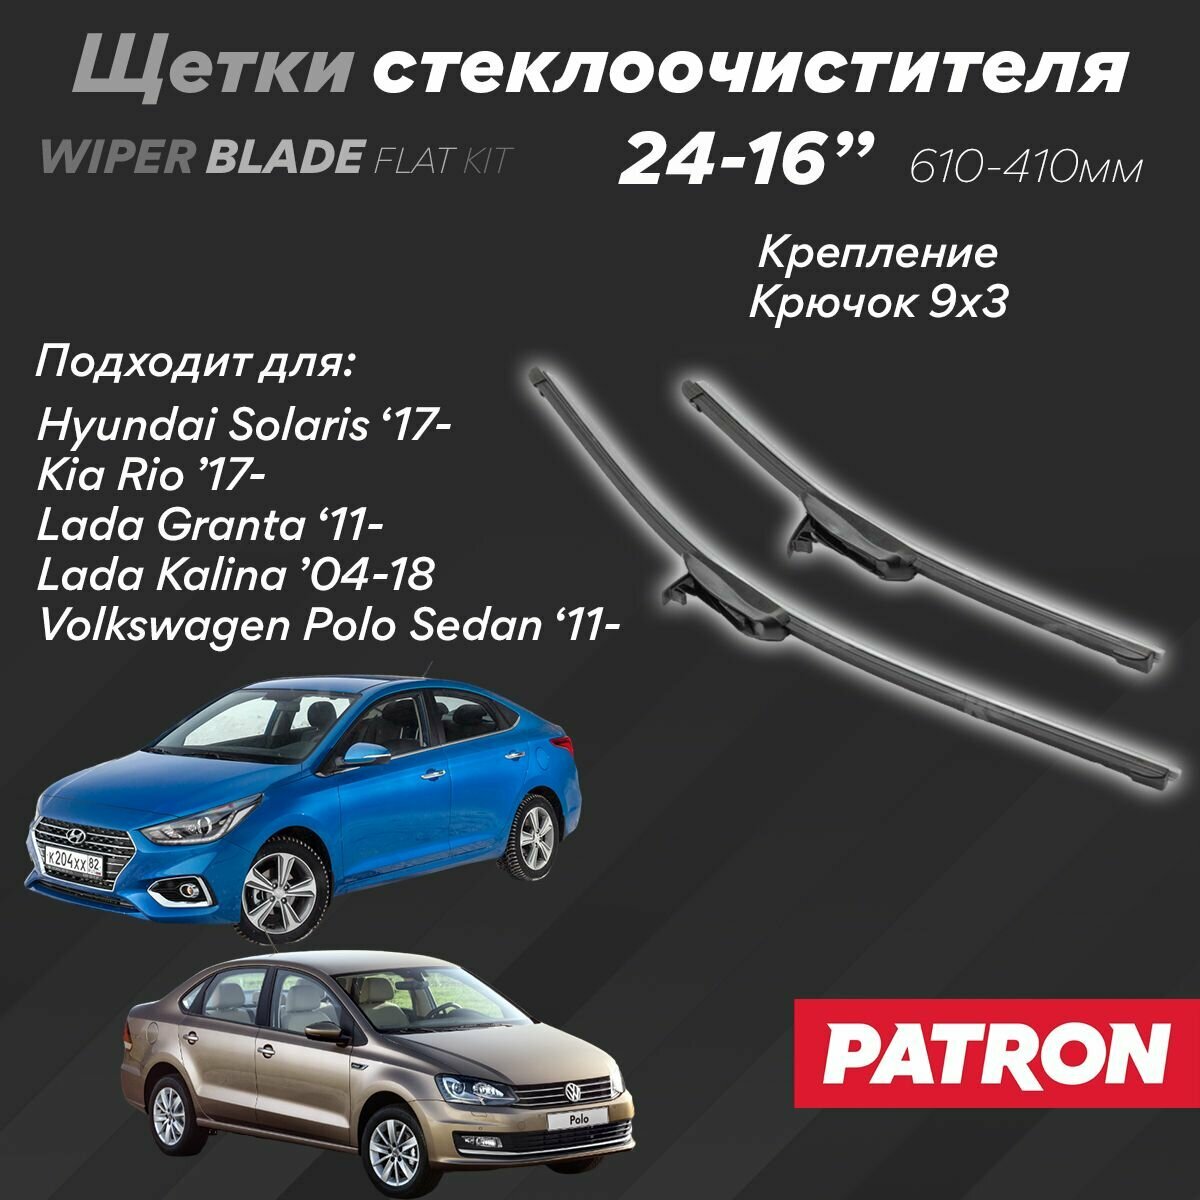 Комлпект дворников (щетки стеклоочистителя) 60 и 40см для VW Polo sedan, Hyundai Solaris c 2017, Kia Rio c 2017, Lada Granta, Kalina